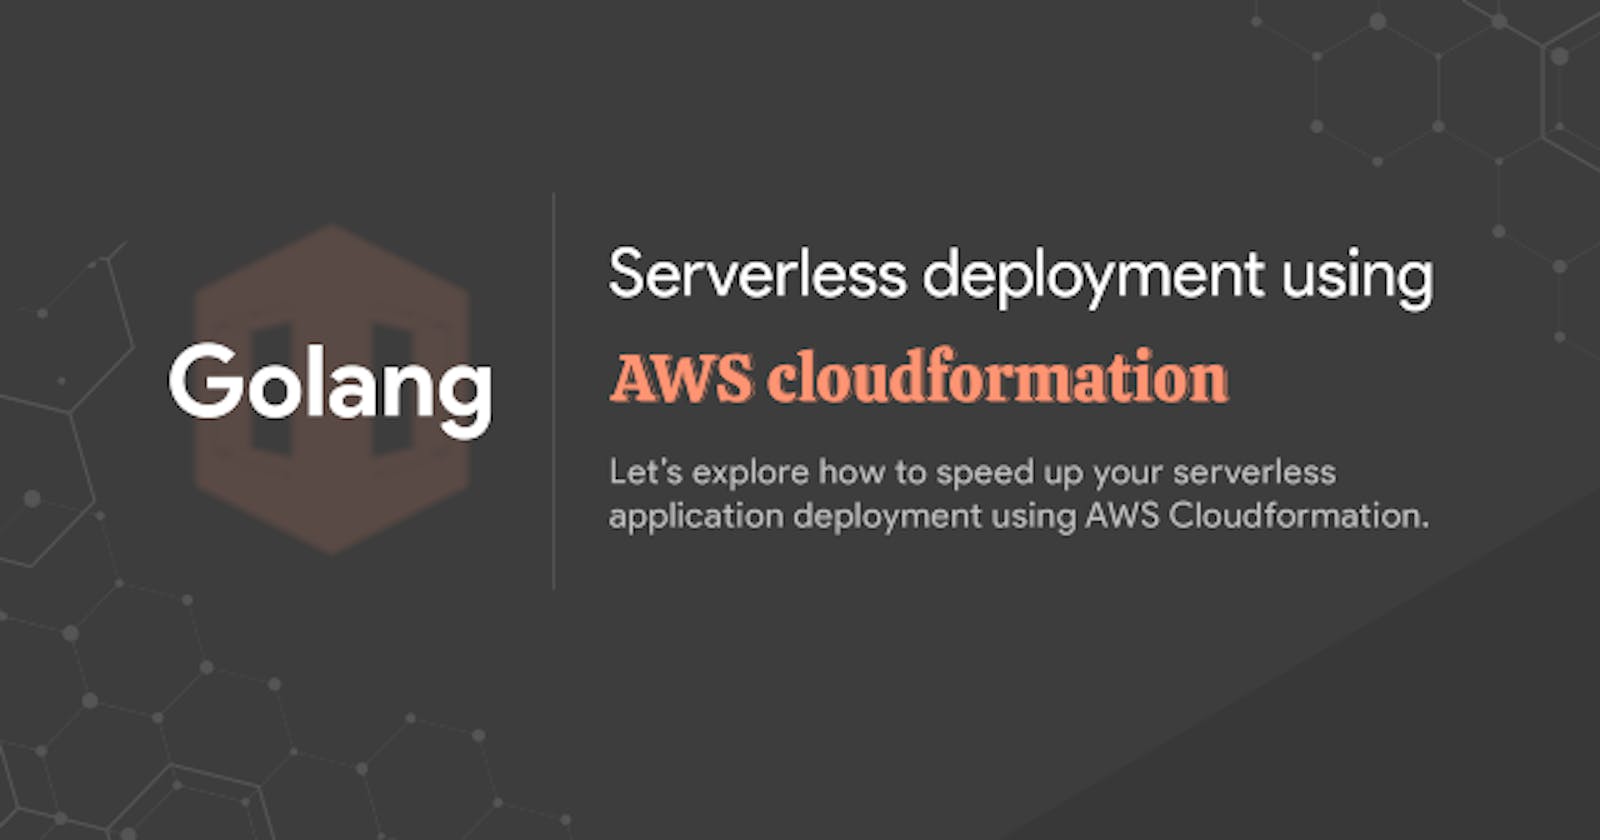 Golang: Serverless deployment using AWS Cloudformation